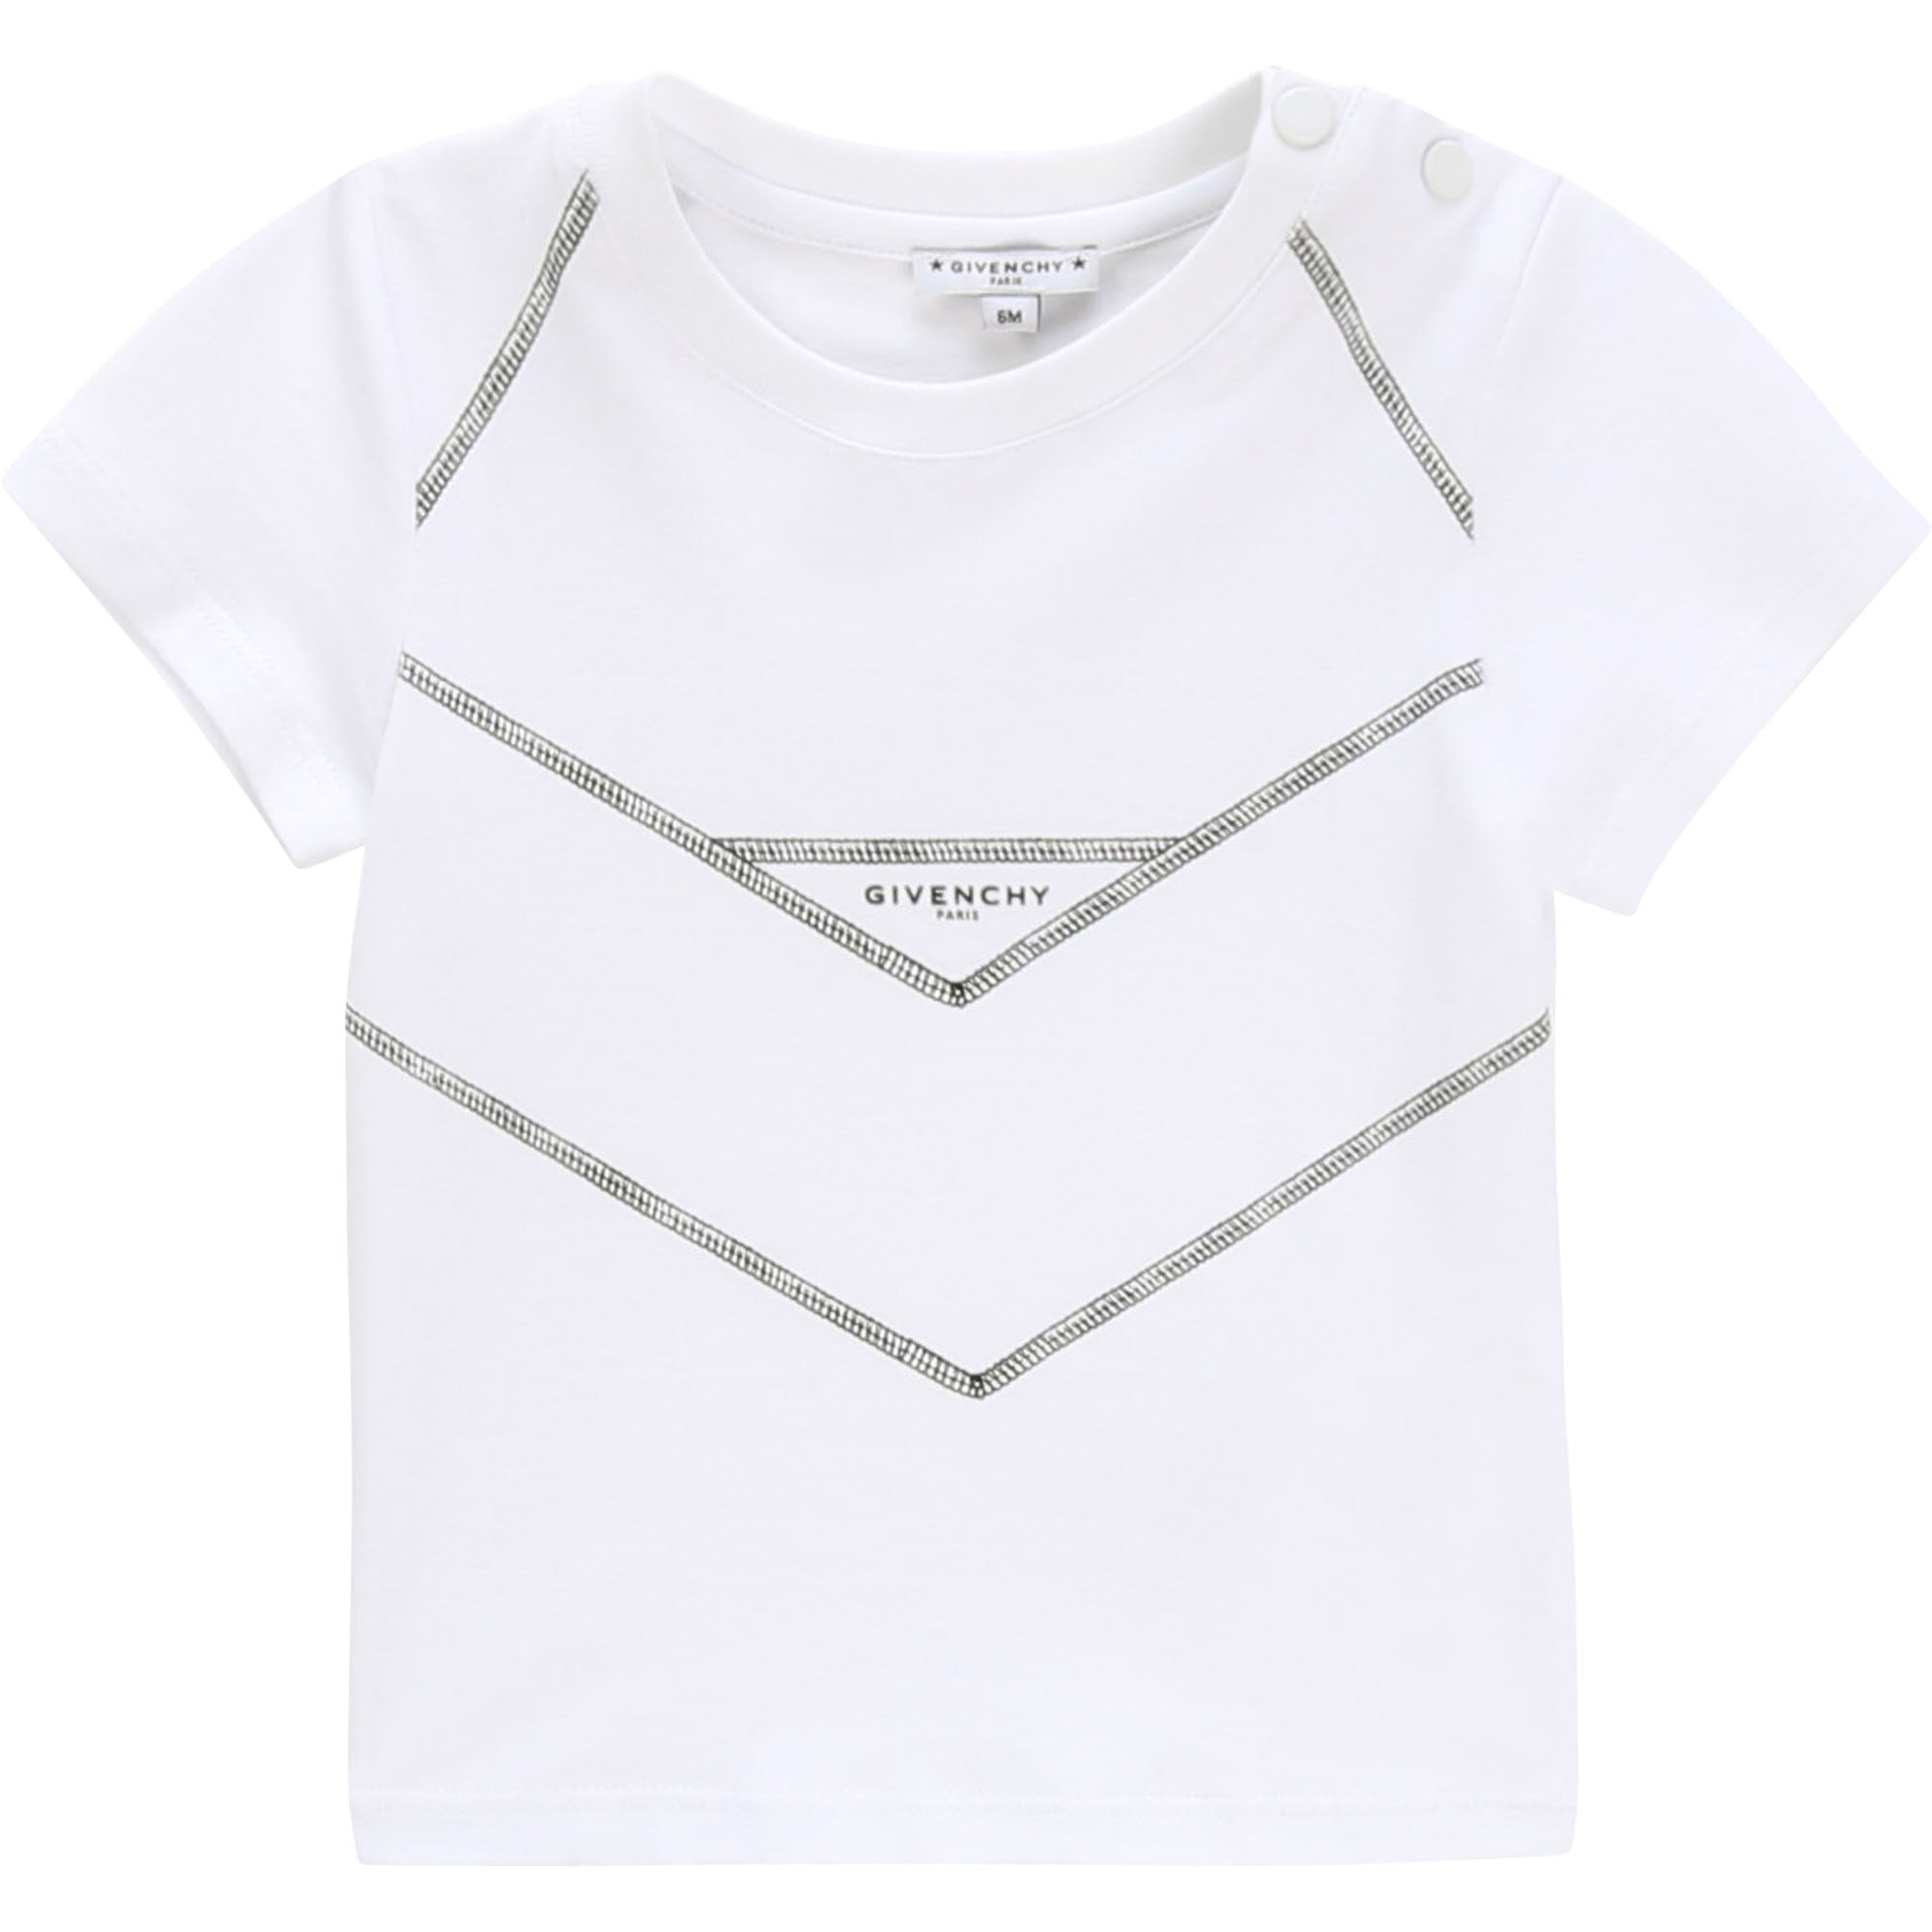 Baby Boys White Cotton T-shirt